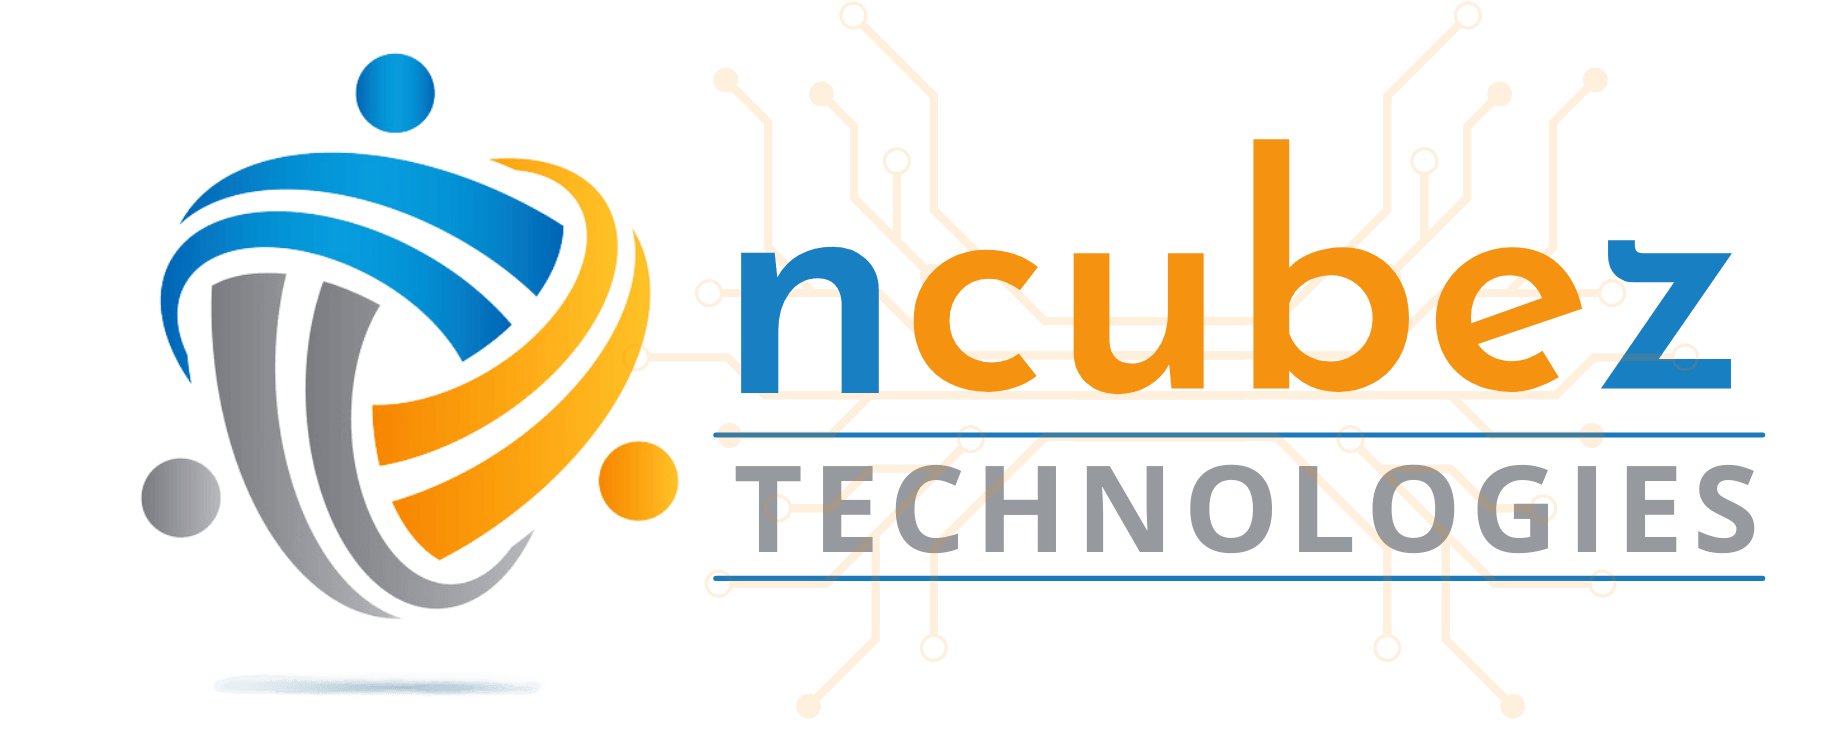 Ncubez Technologies